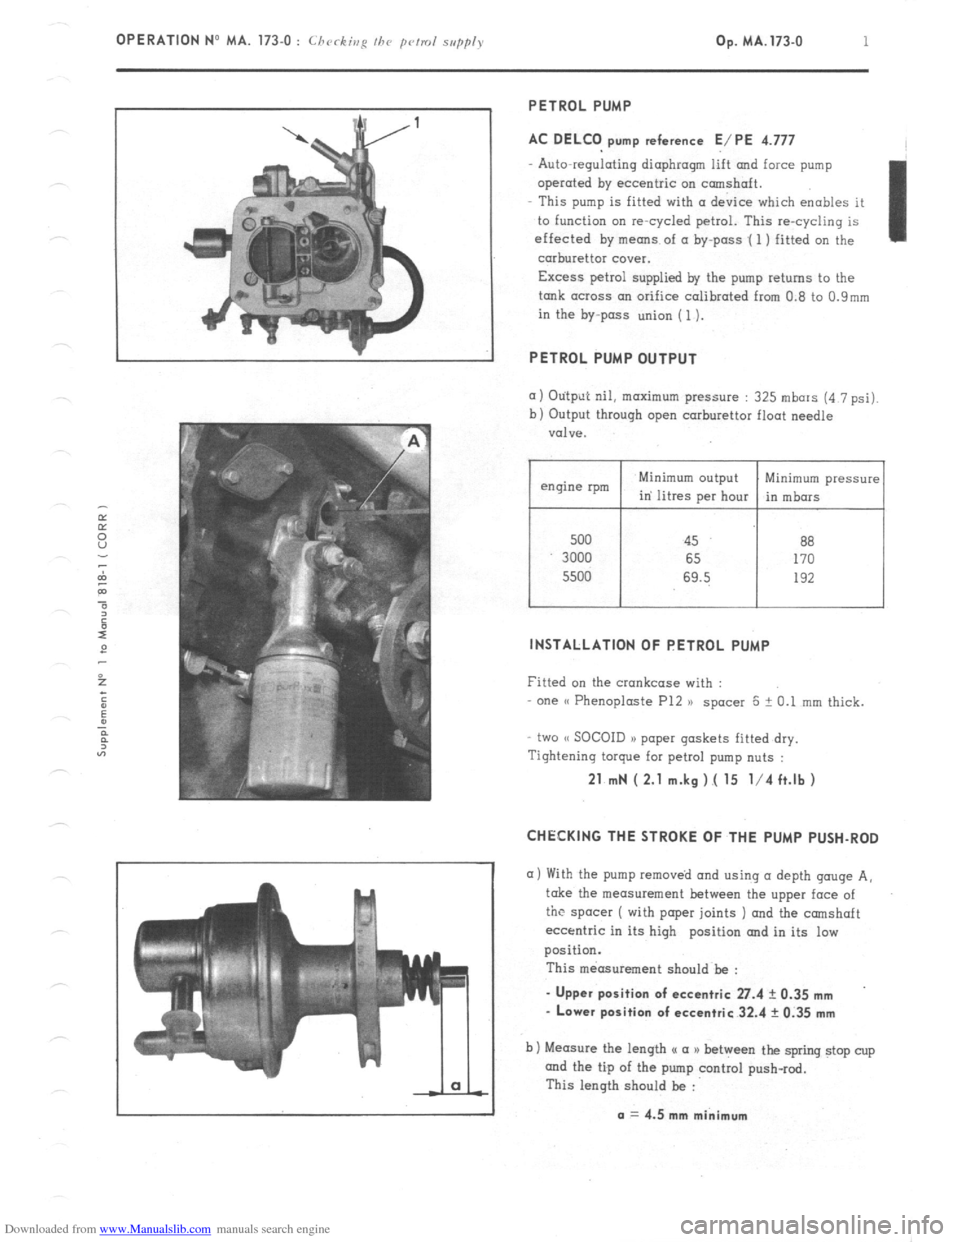 Citroen CX 1984 1.G Workshop Manual Downloaded from www.Manualslib.com manuals search engine OPERATION No MA. 173-O : Chrrkivp fhr prmd s,,pp/> Op. MA. 173.0 1 
PETROL PUMP 
AC DELCO pump reference E/PE 4.777 
Auto-regulating diaphragm 